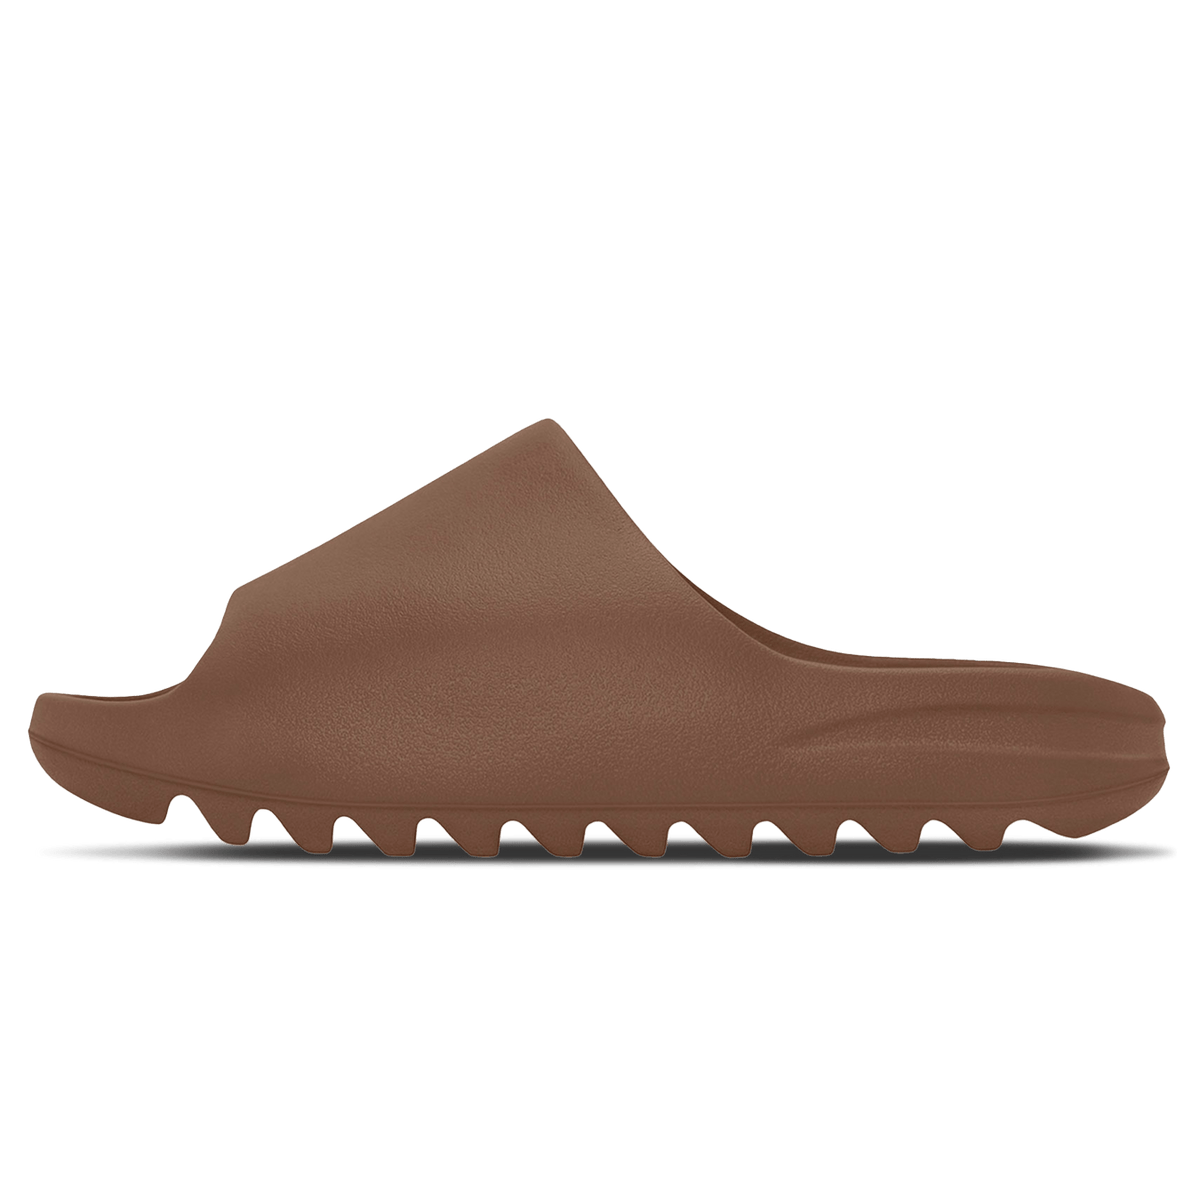 adidas Yeezy Slides 'Flax' - Kick Game